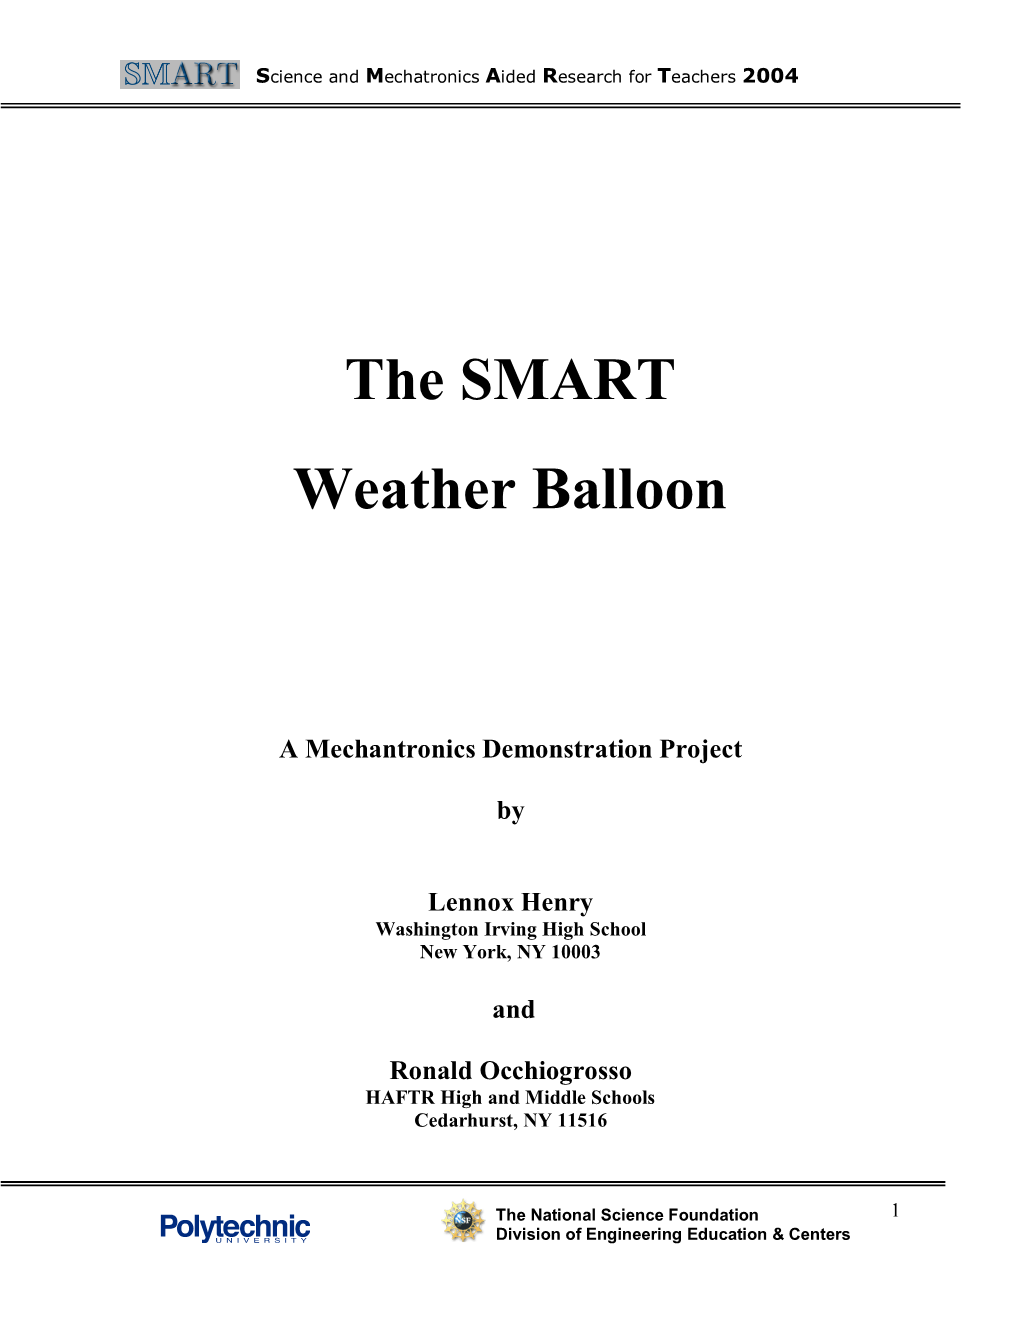 The SMART Weather Balloon